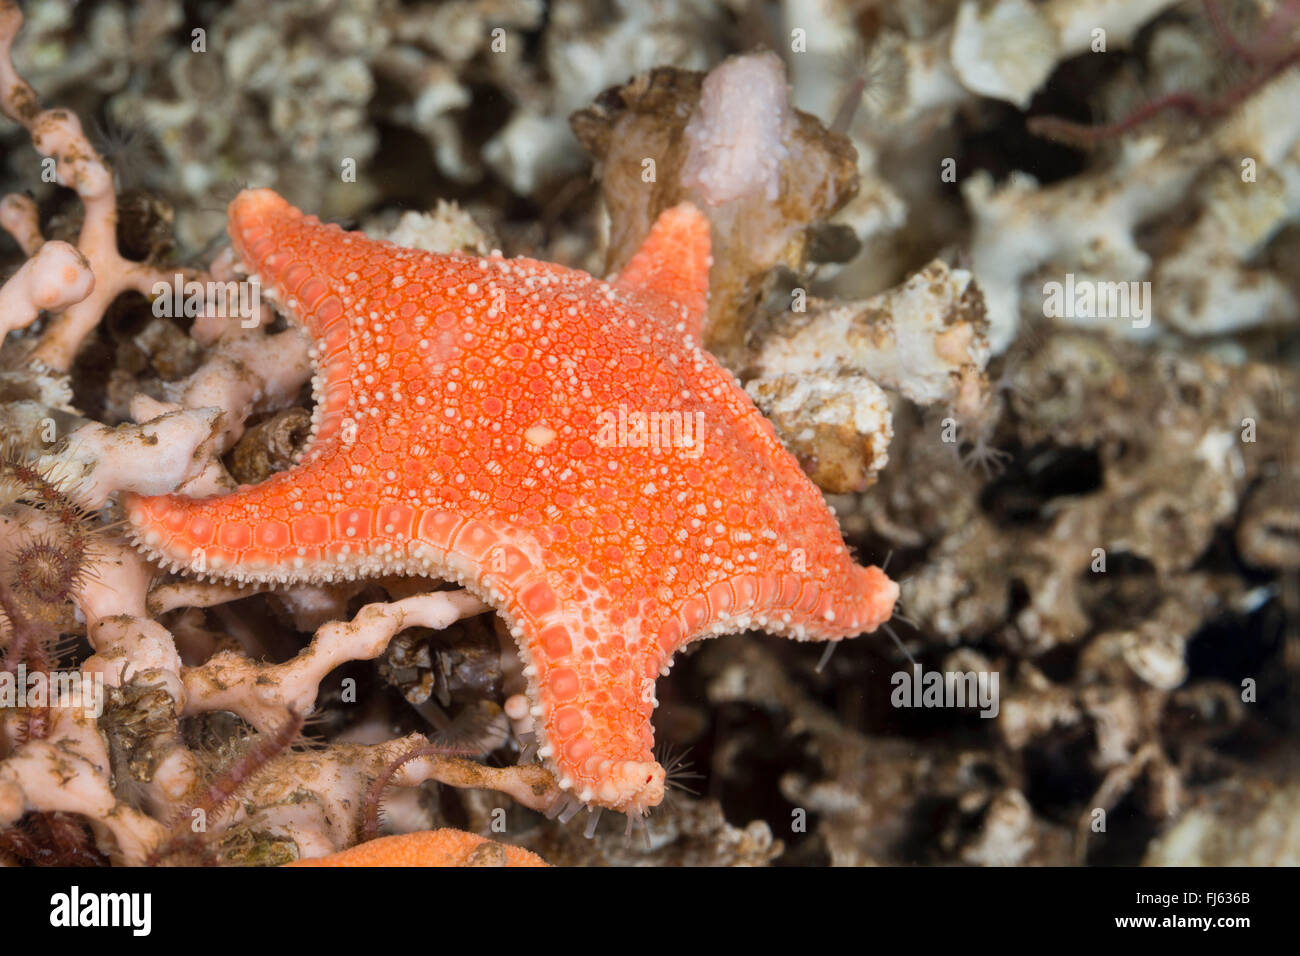 Rigid Cushion Star, Arctic cushion star (Hippasteria phrygiana, Hippasteria trojana, Hippasteria insignis), on a coral Stock Photo